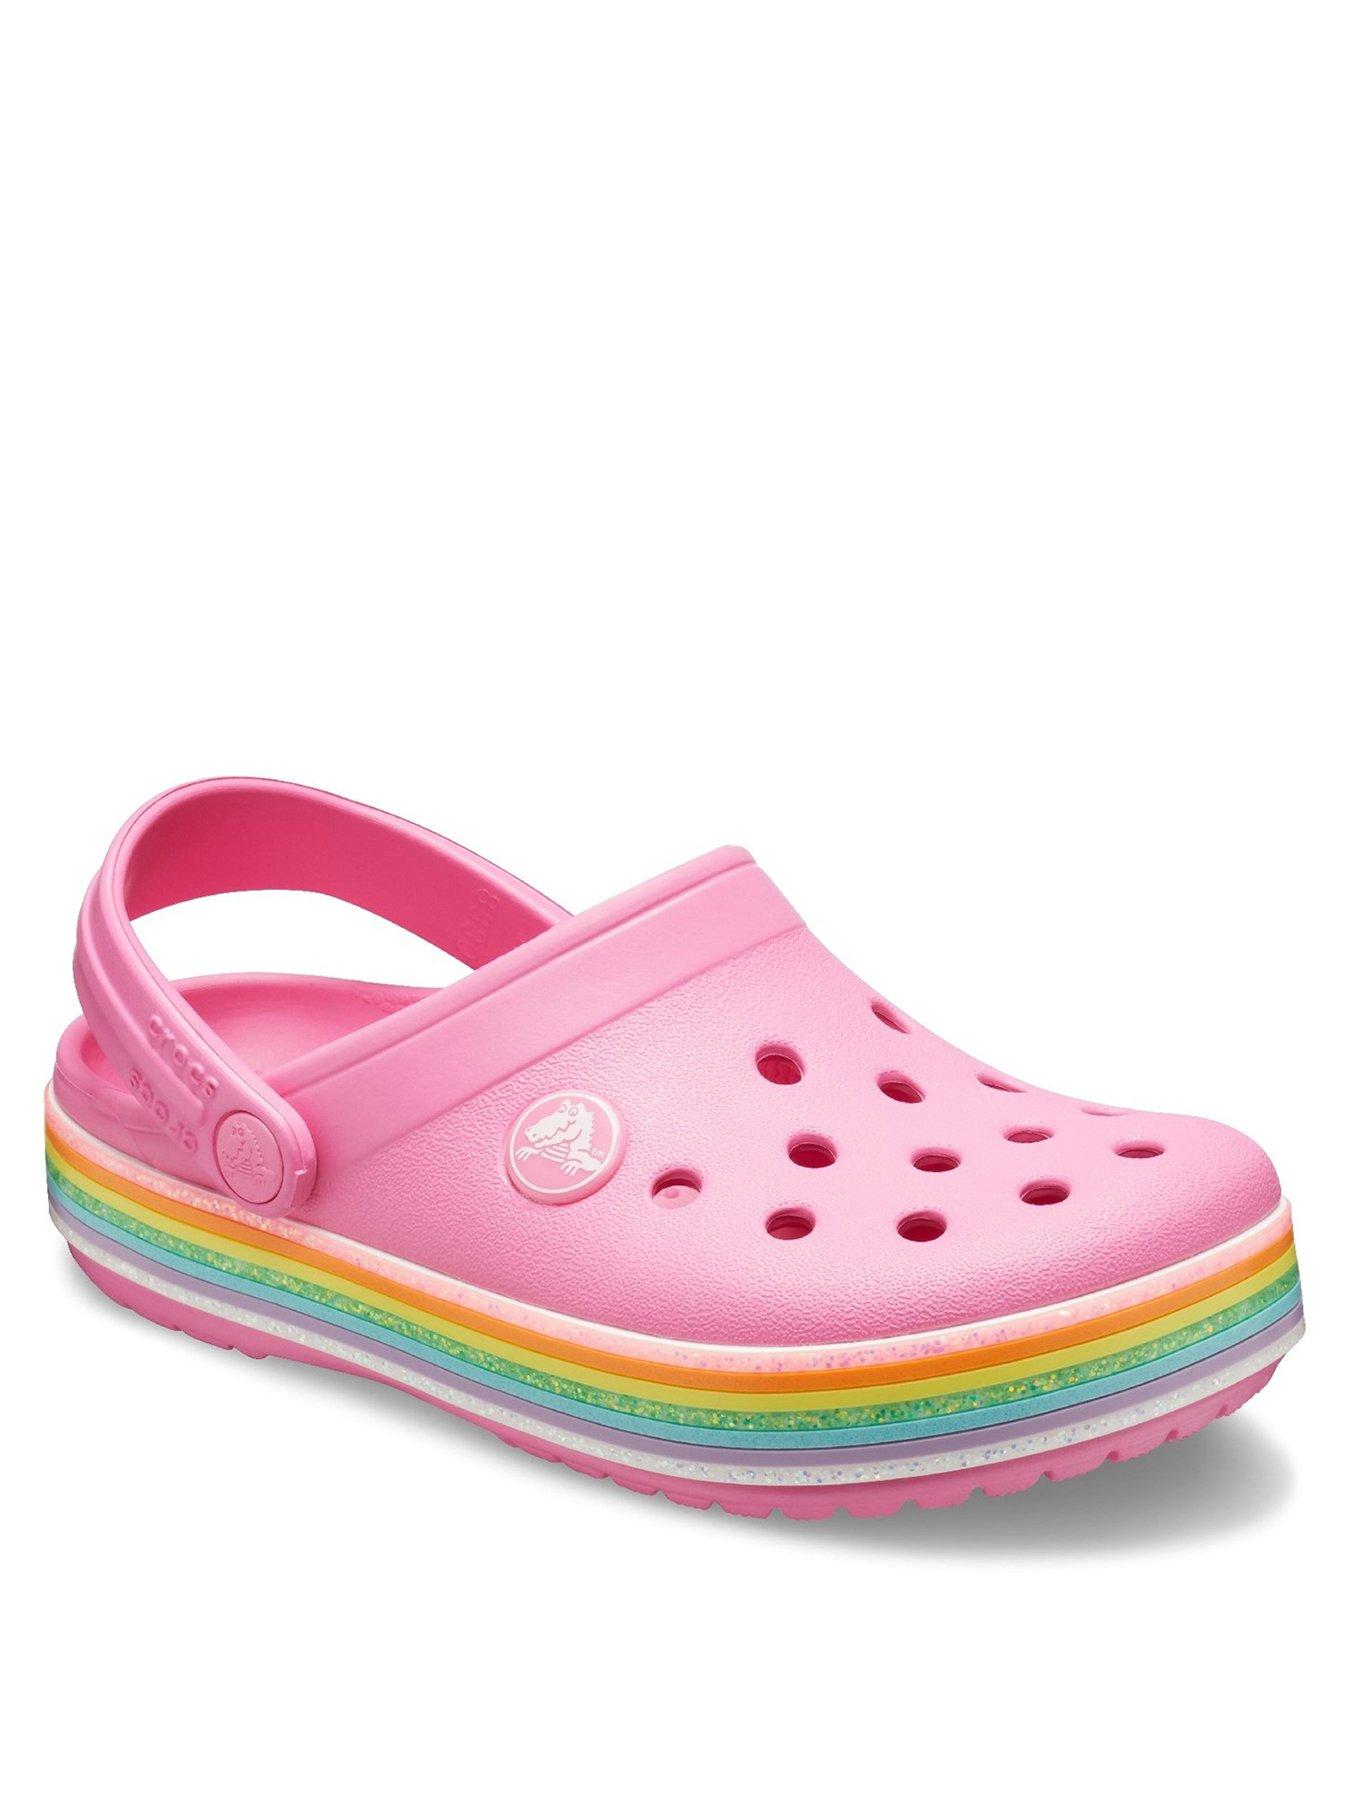 girls crocs size 13